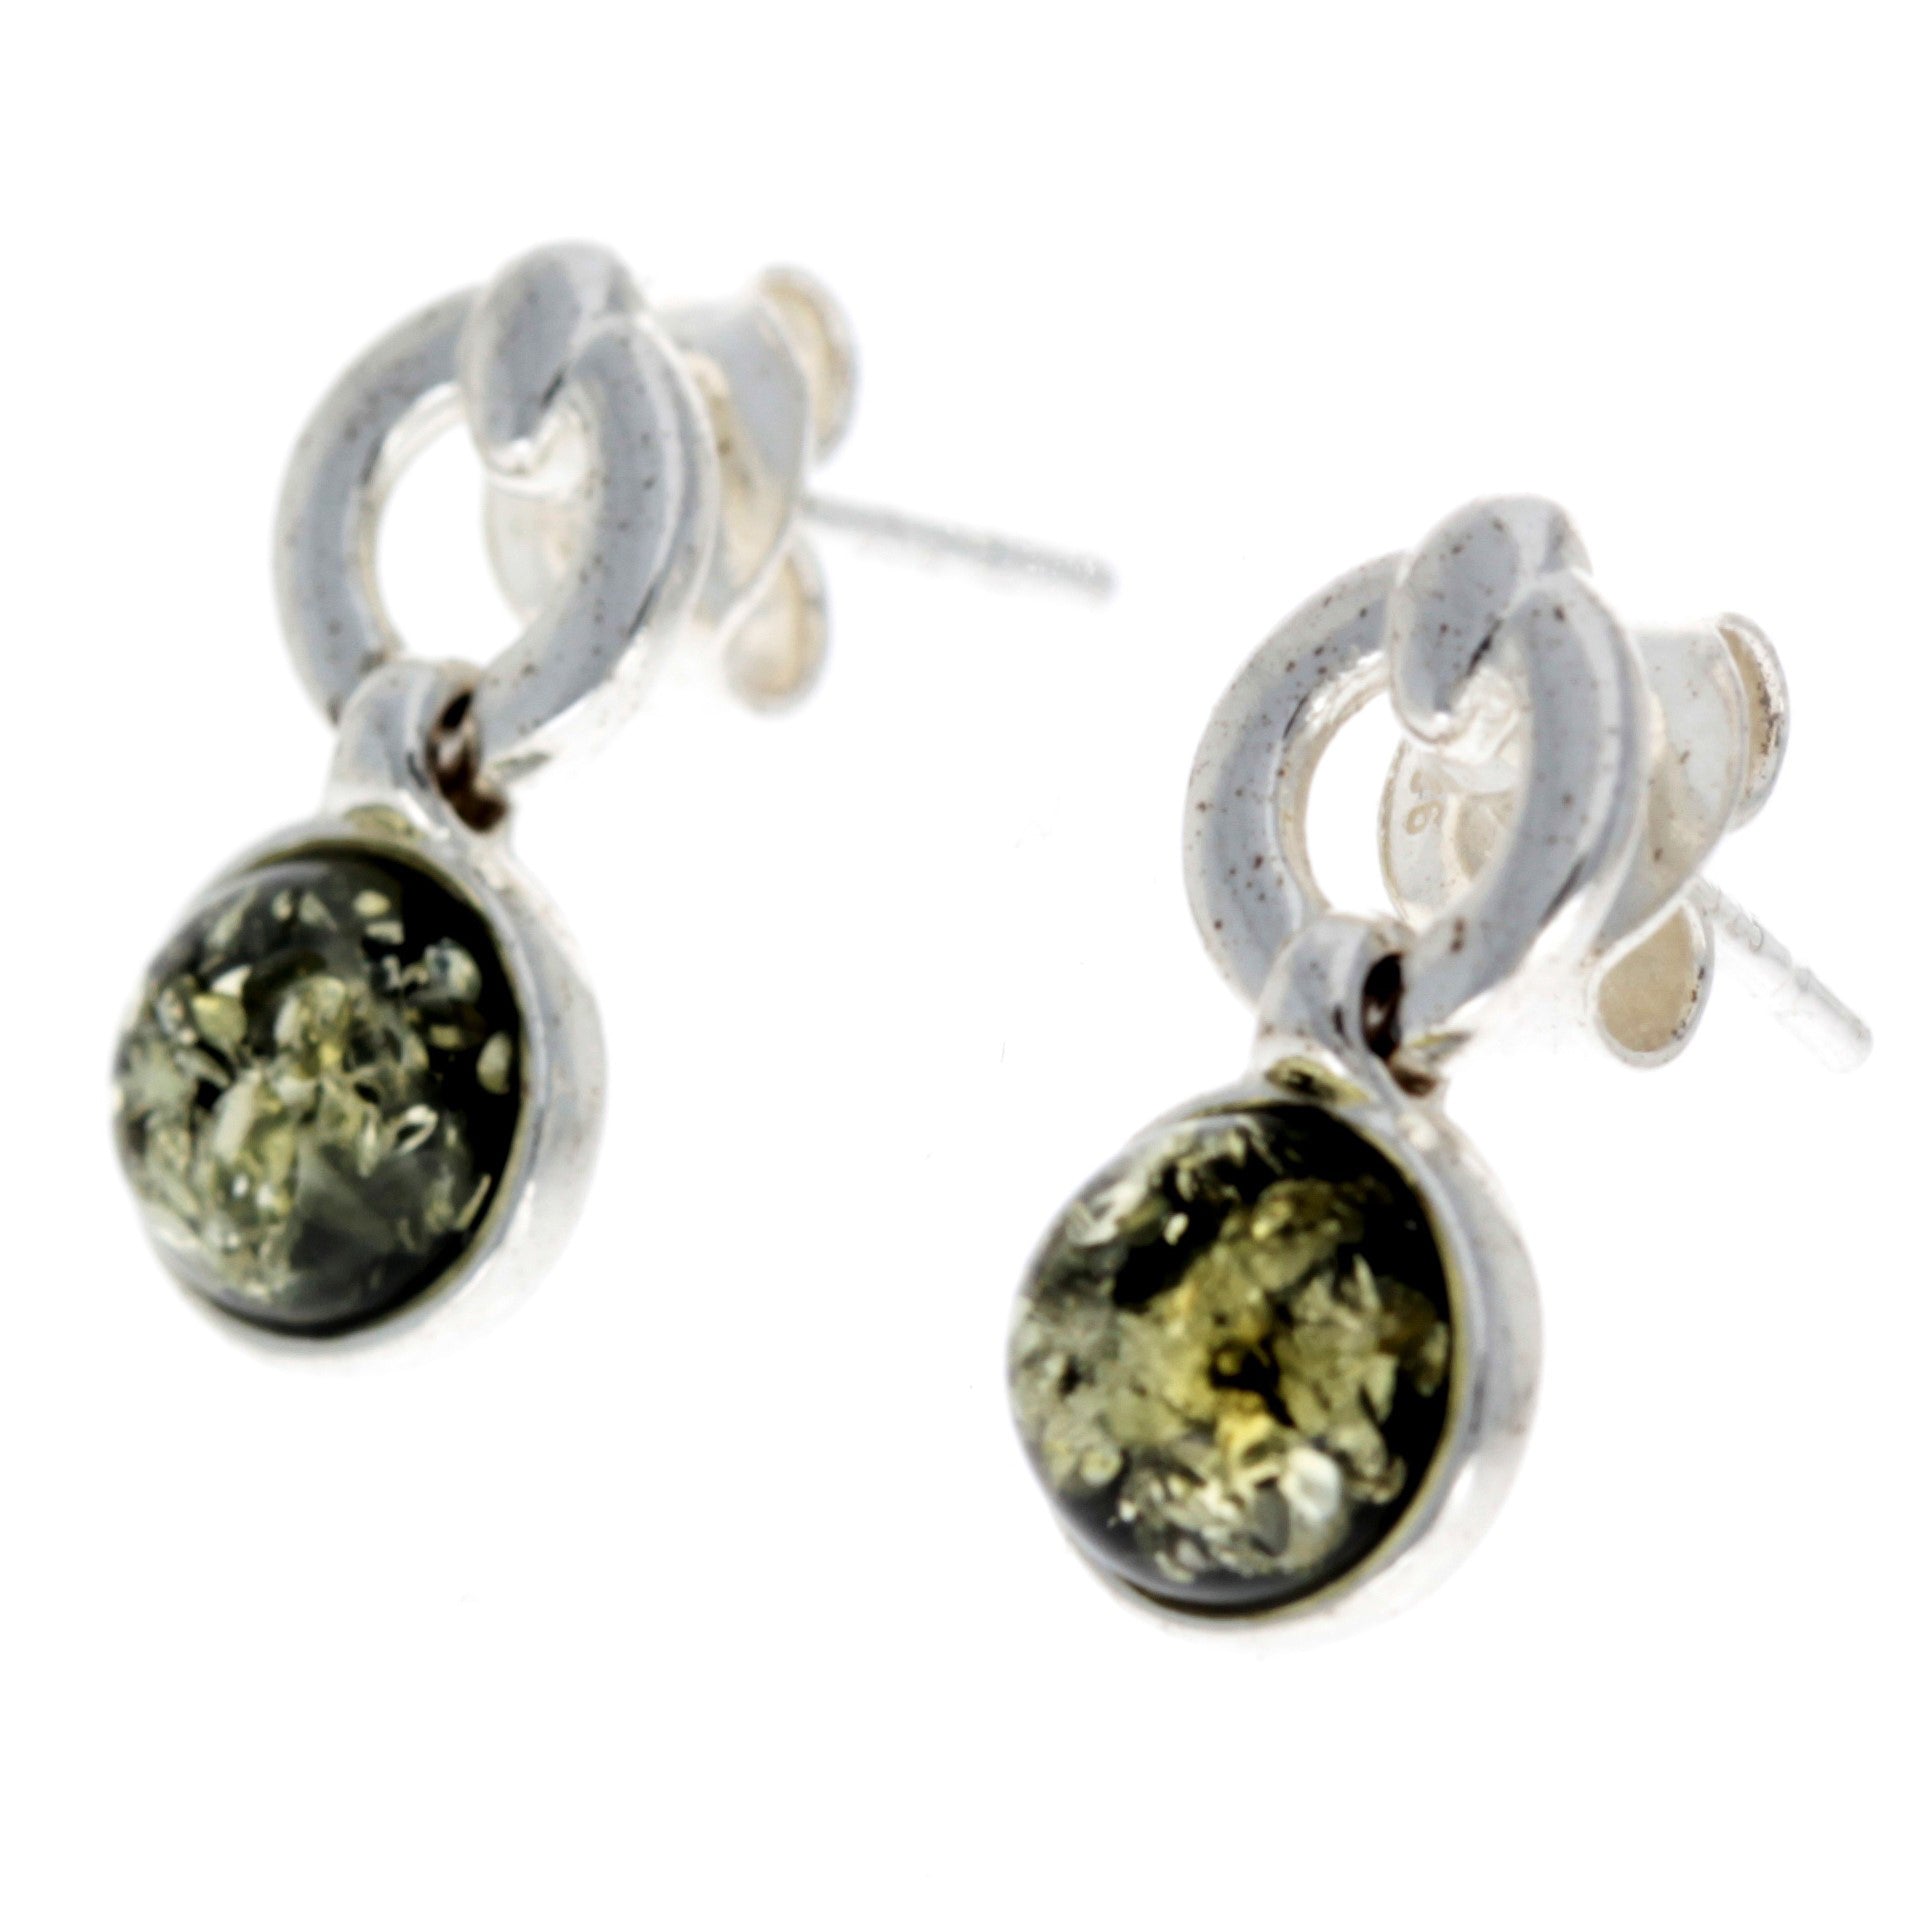 925 Sterling Silver & Genuine Baltic Amber Modern Drop Earrings - GL168